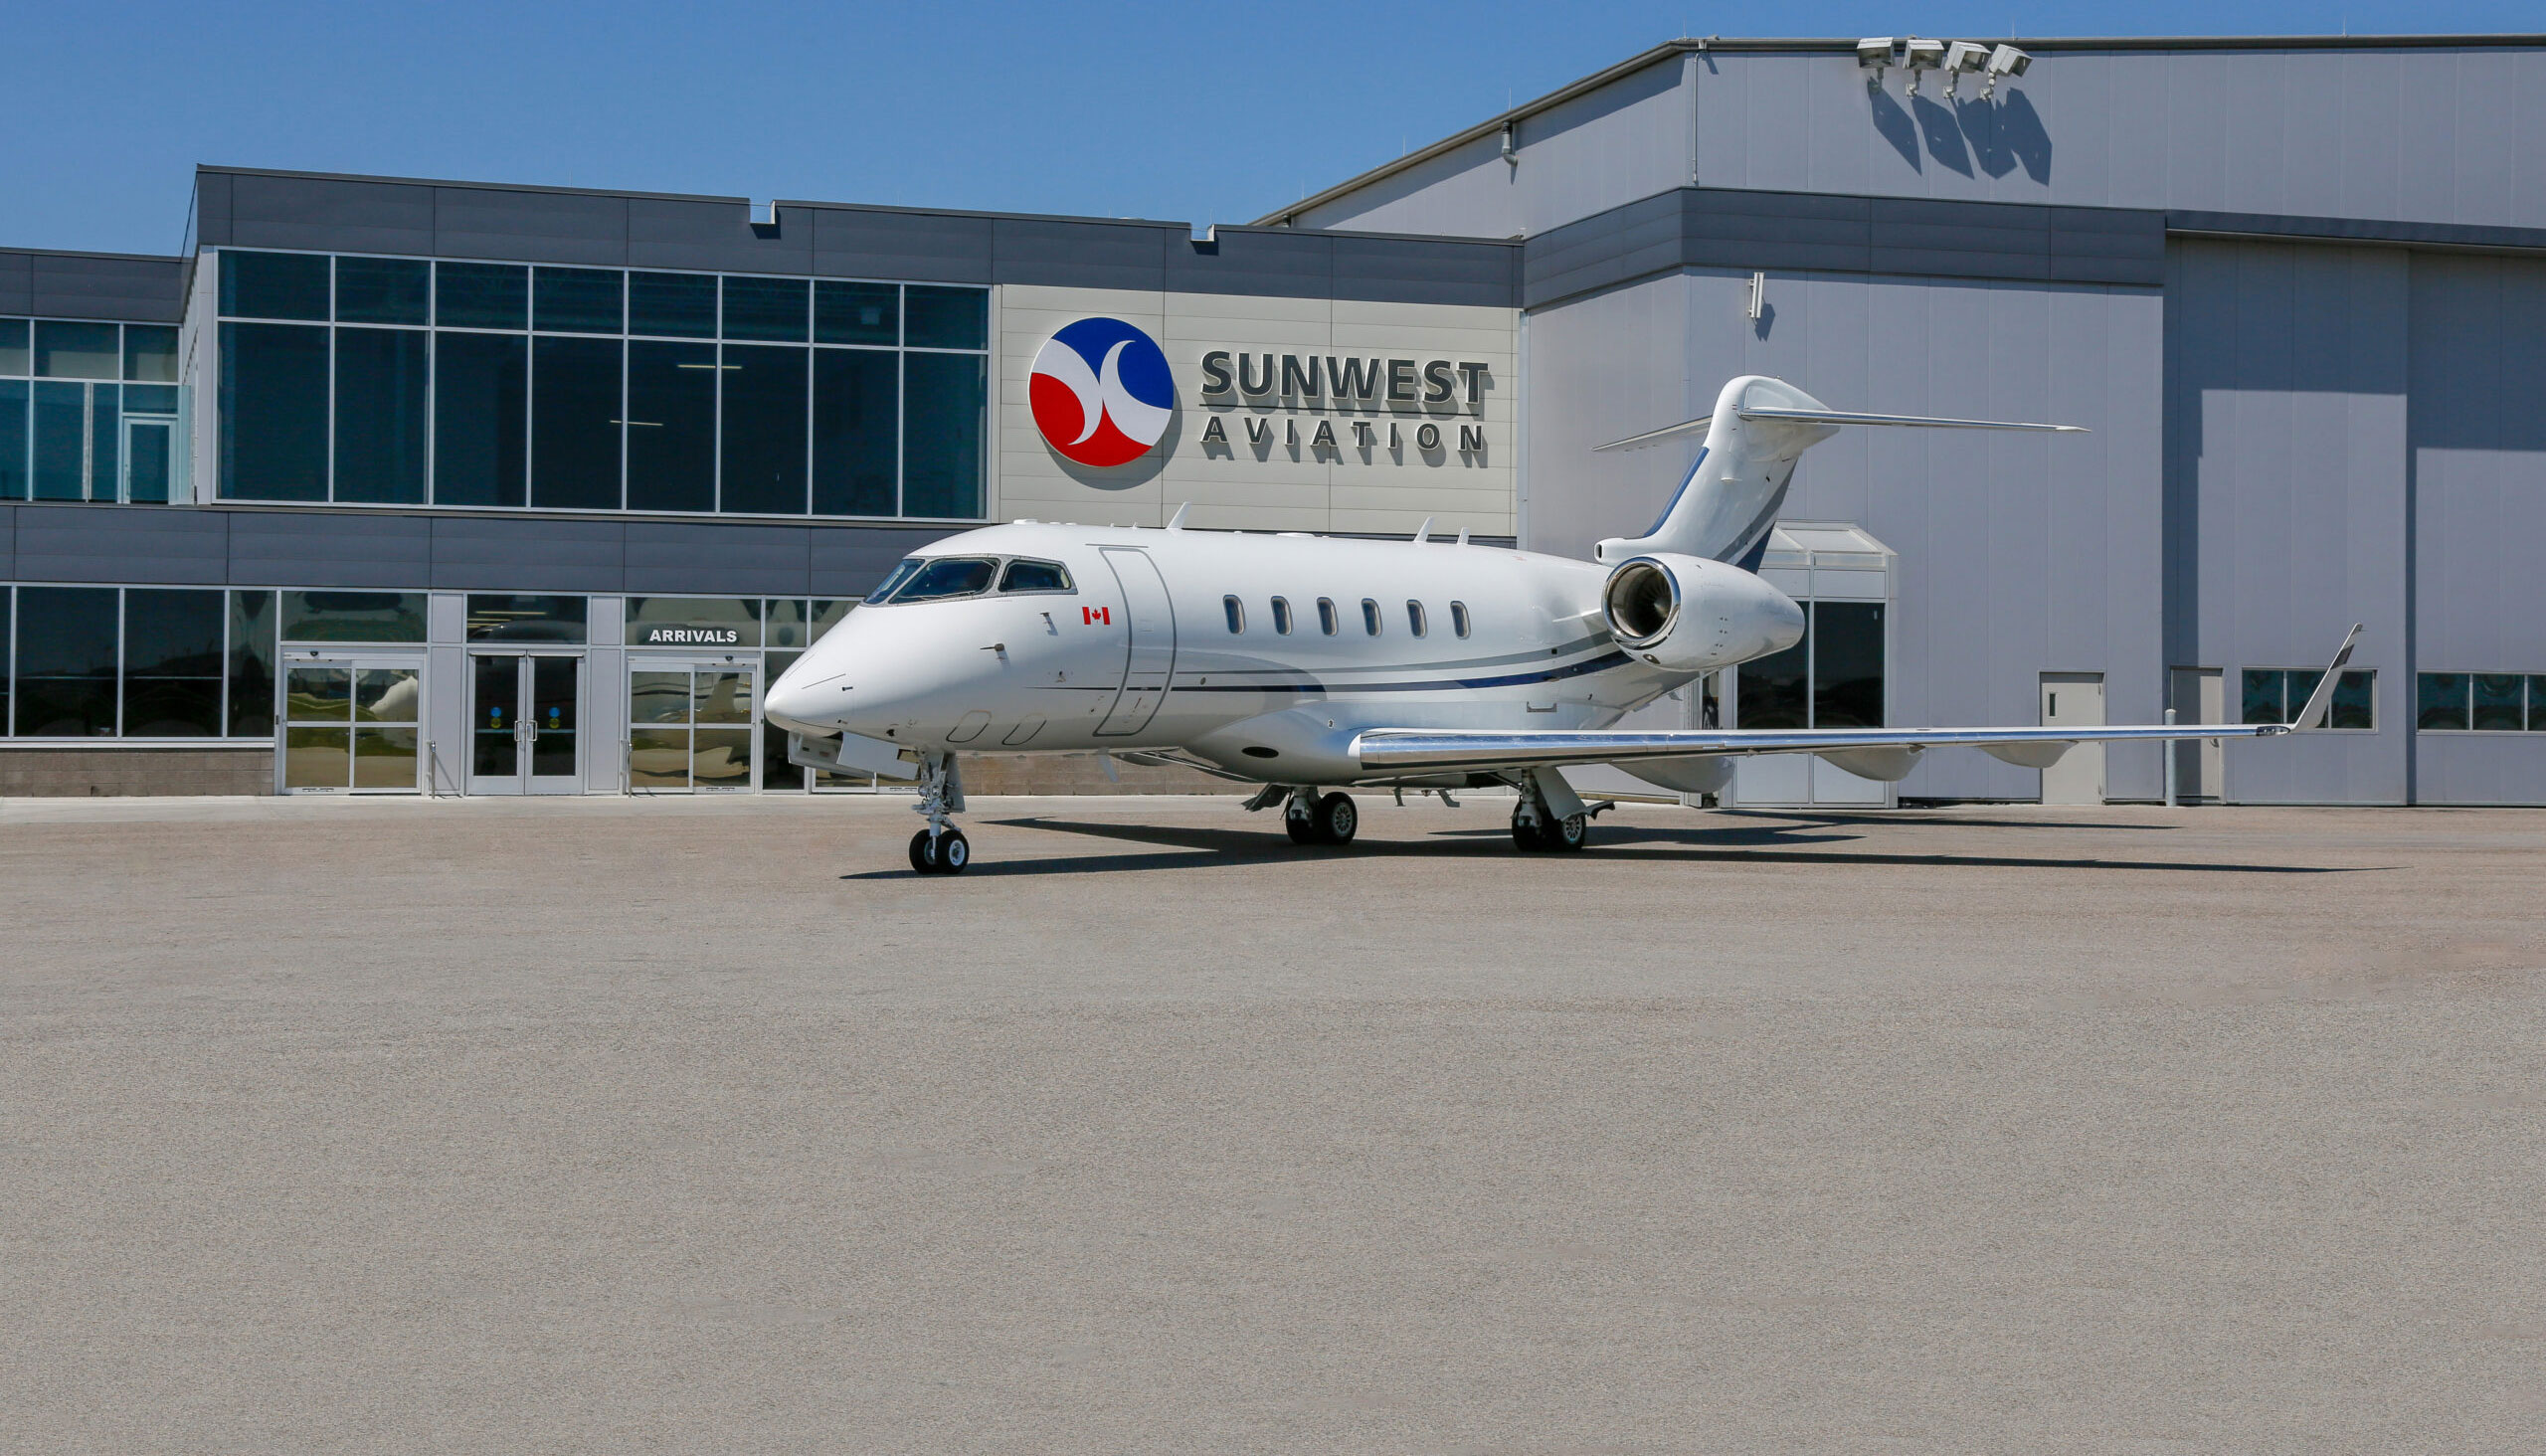 Sunwest Aviation